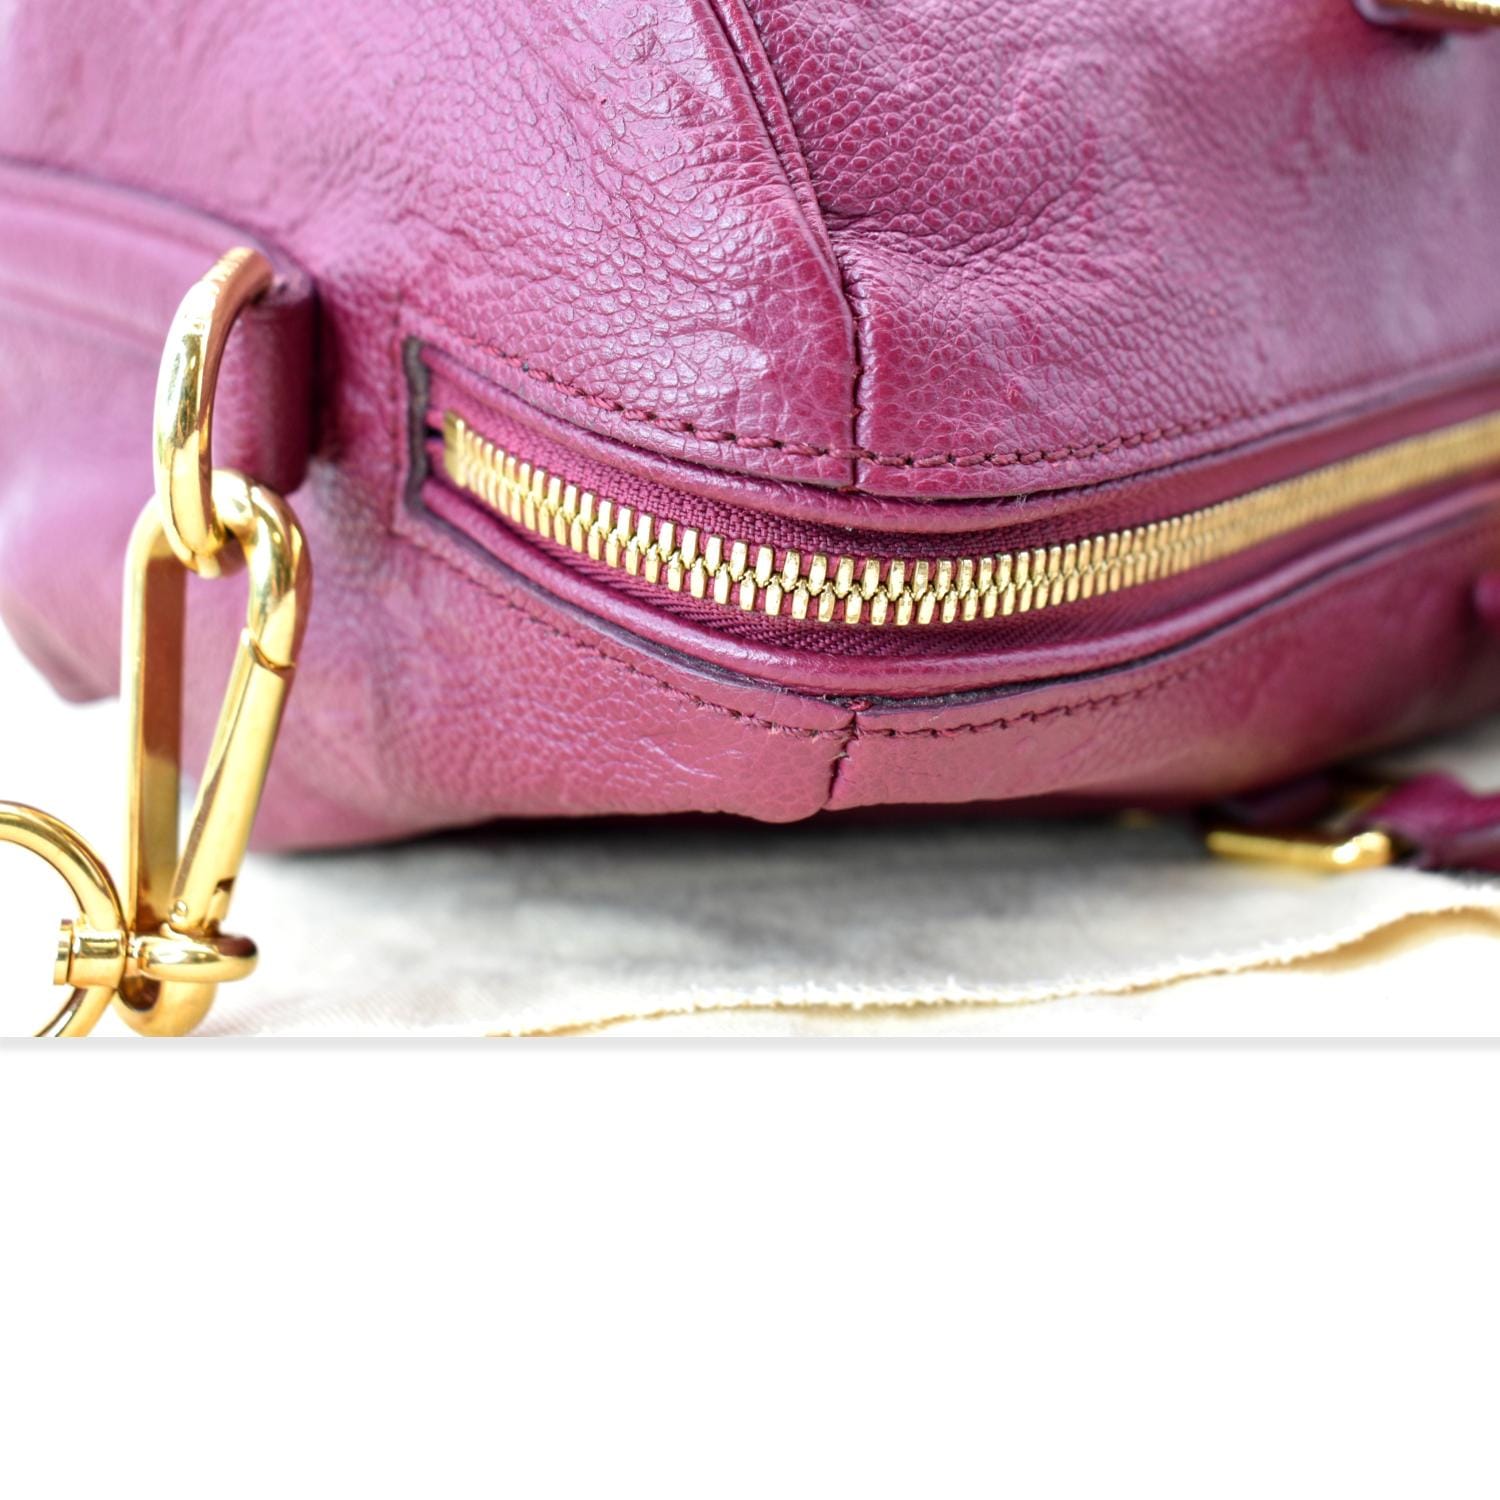 Louis Vuitton - Authenticated Speedy Bandoulière Handbag - Leather Brown for Women, Good Condition